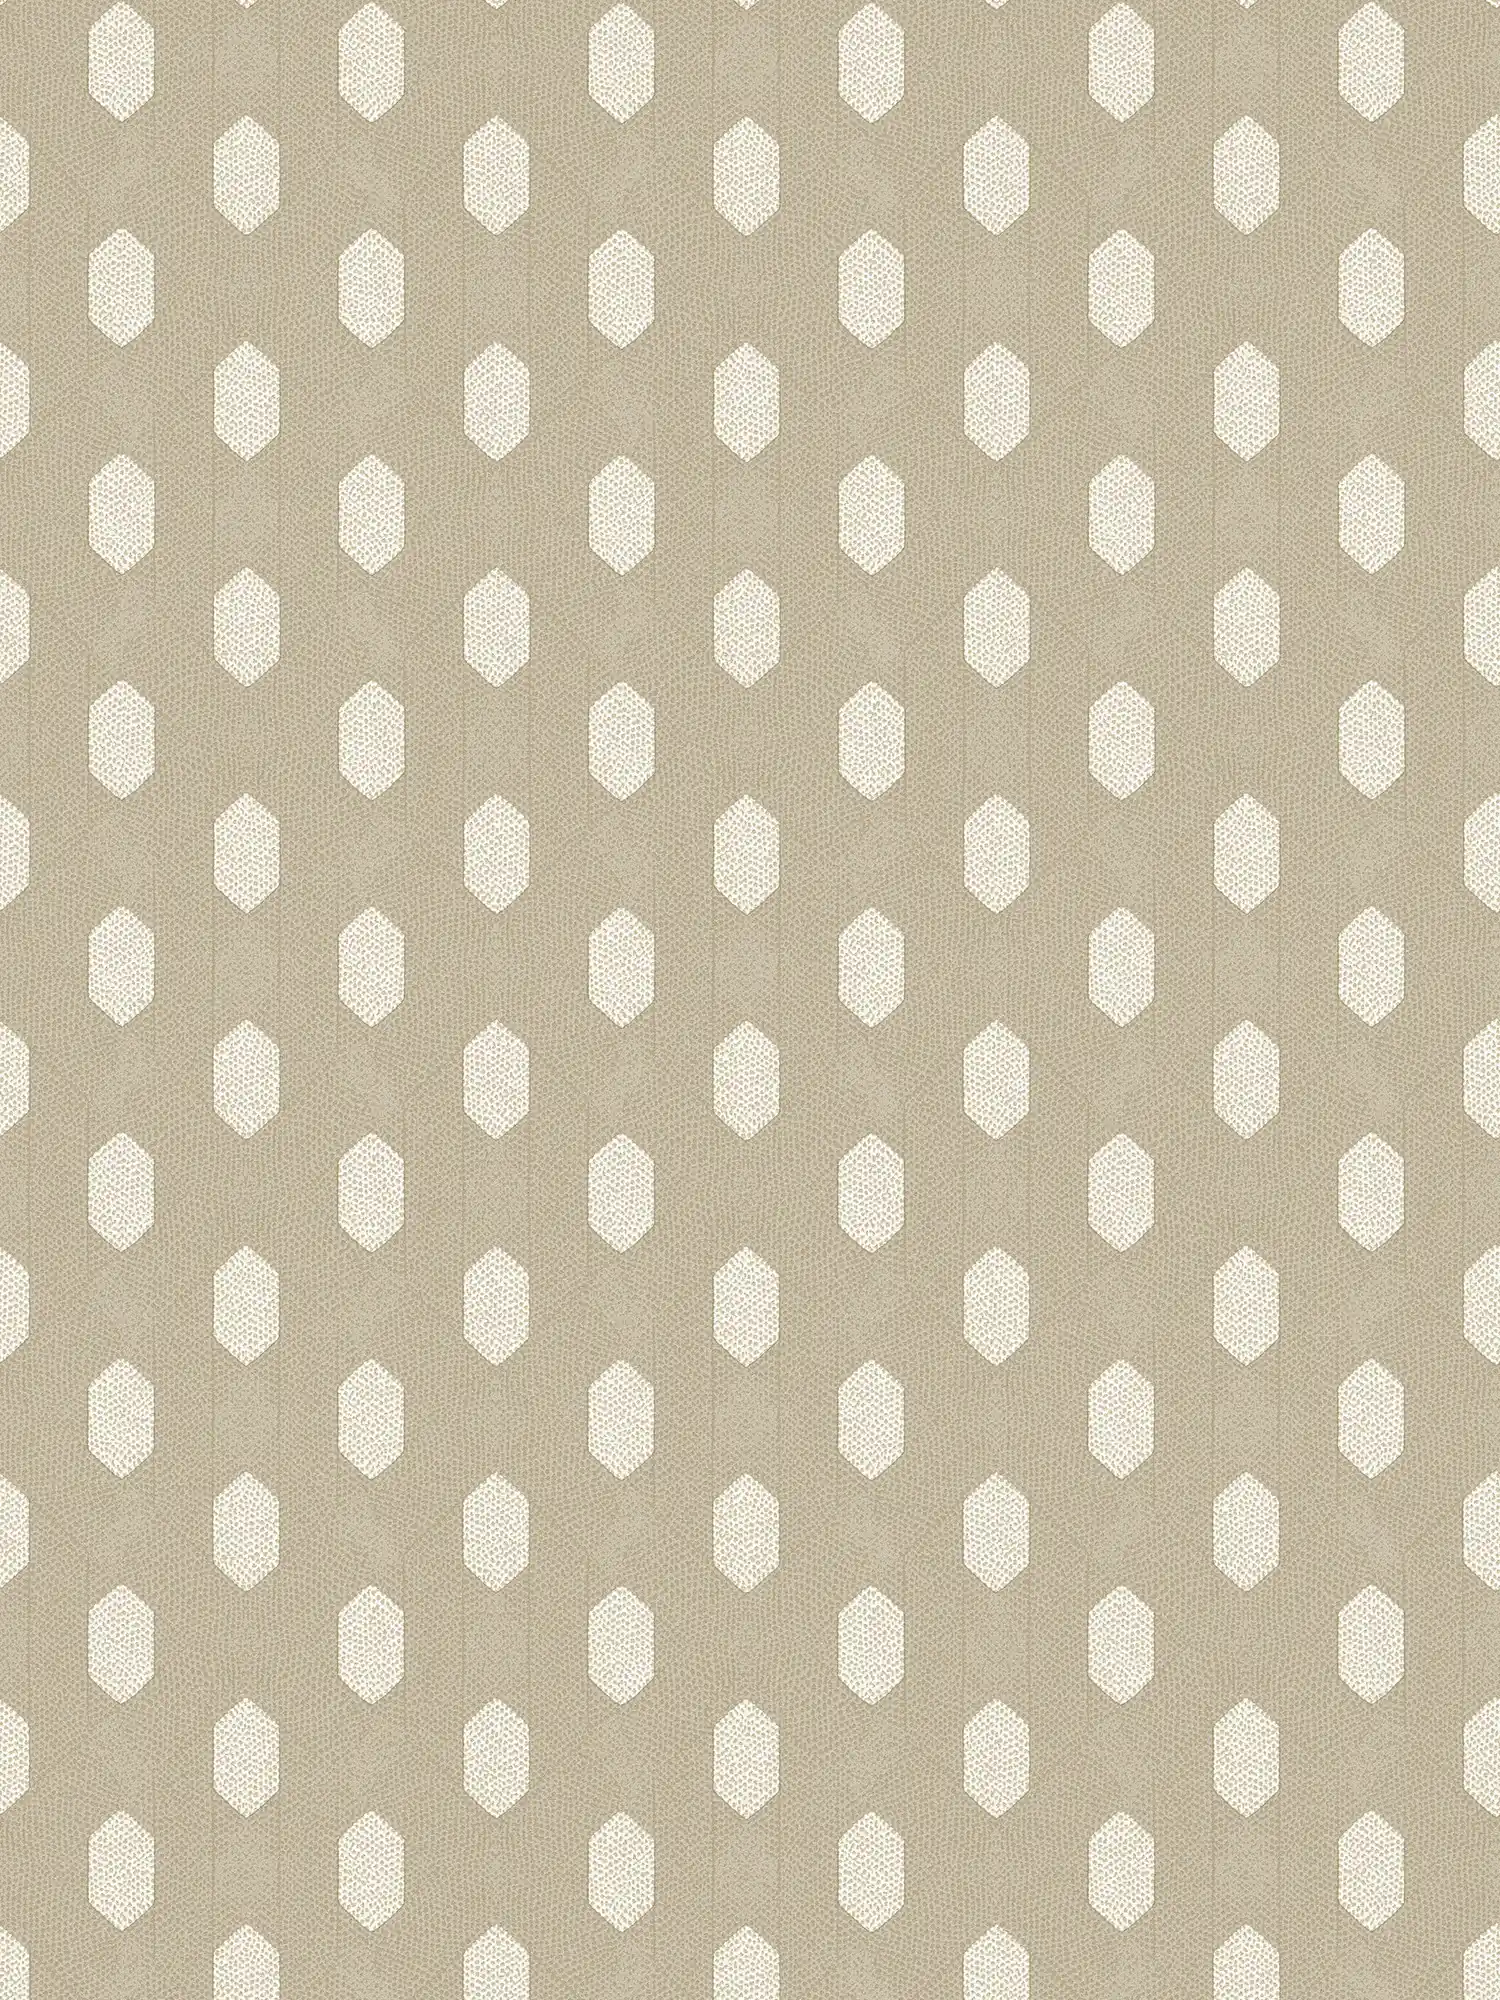 Beige non-woven wallpaper geometric pattern - cream, gold, beige
